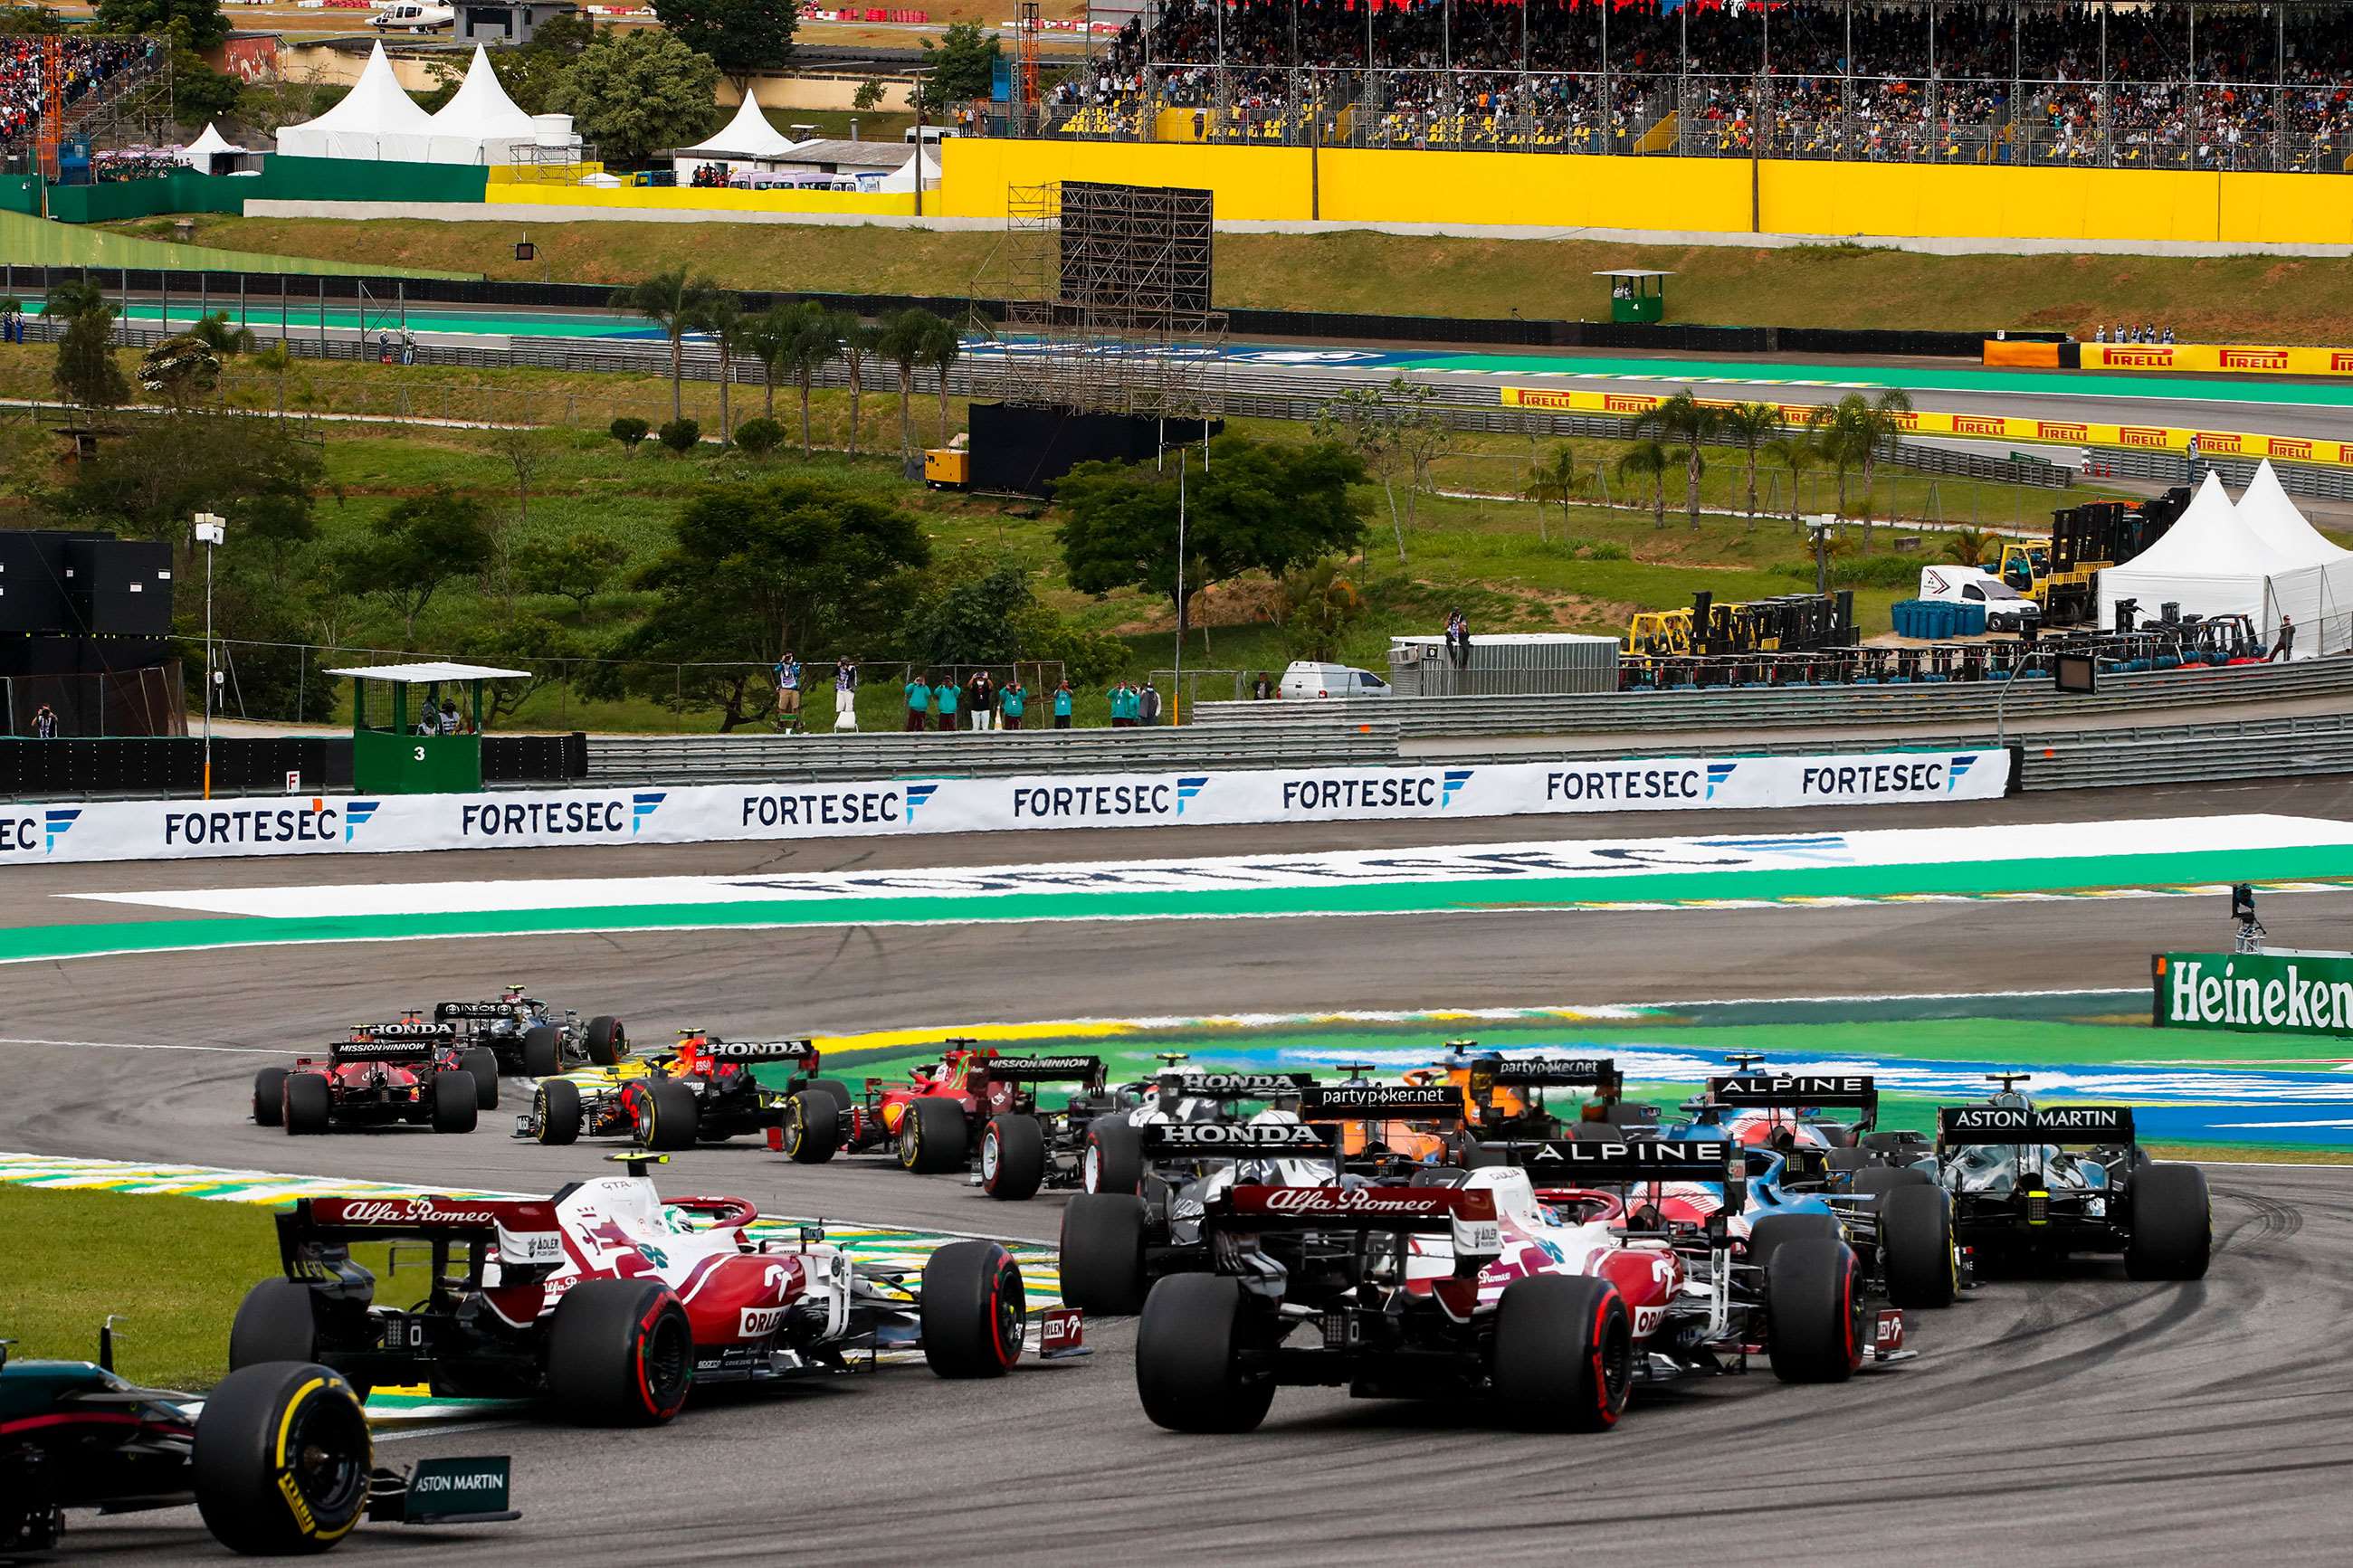 F1 Sprint races return in 2022 GRR